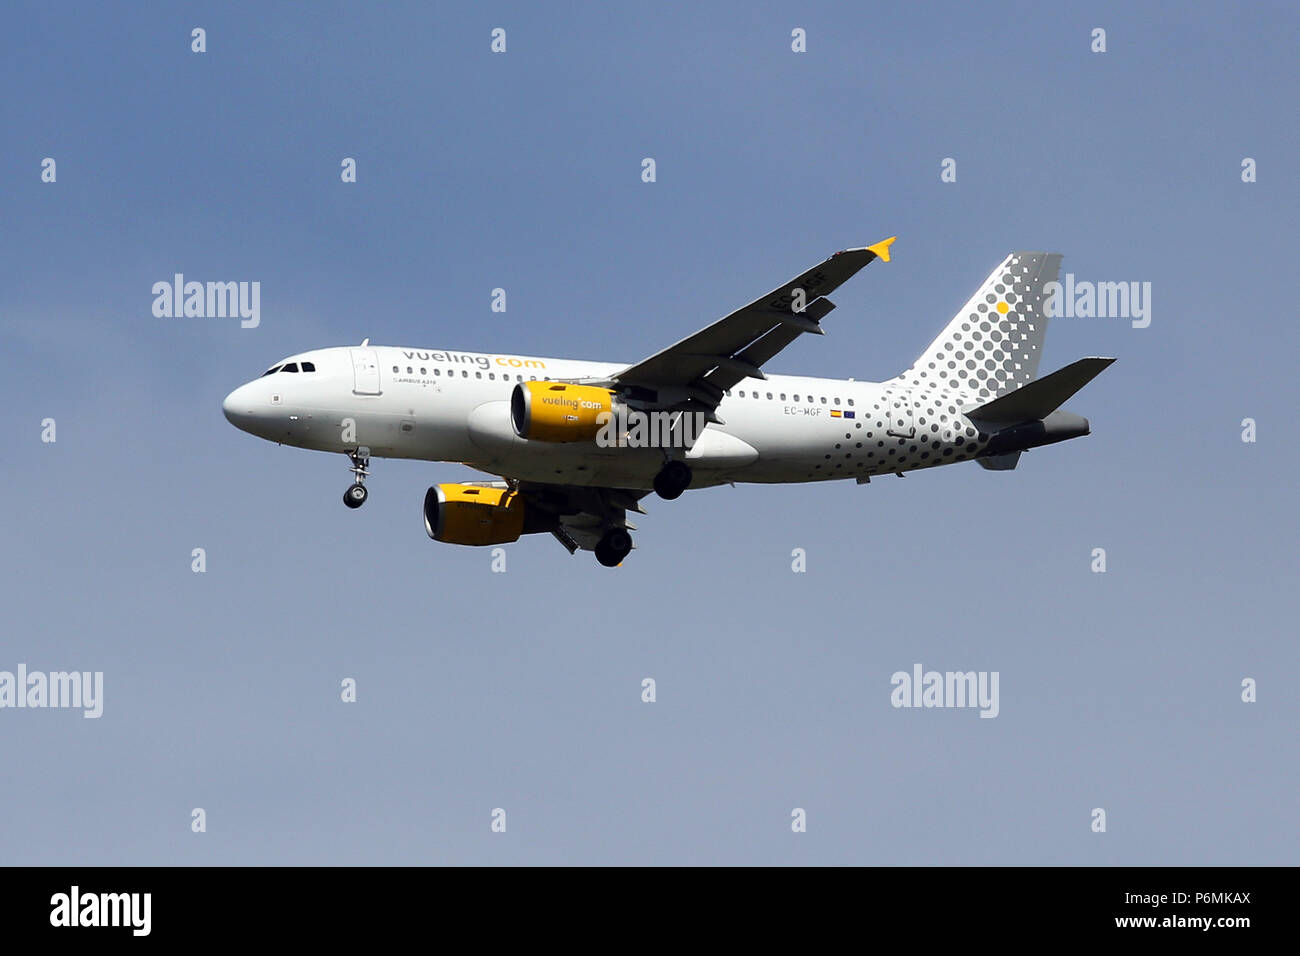 Vueling Airlines Fotos e Imágenes de stock - Alamy